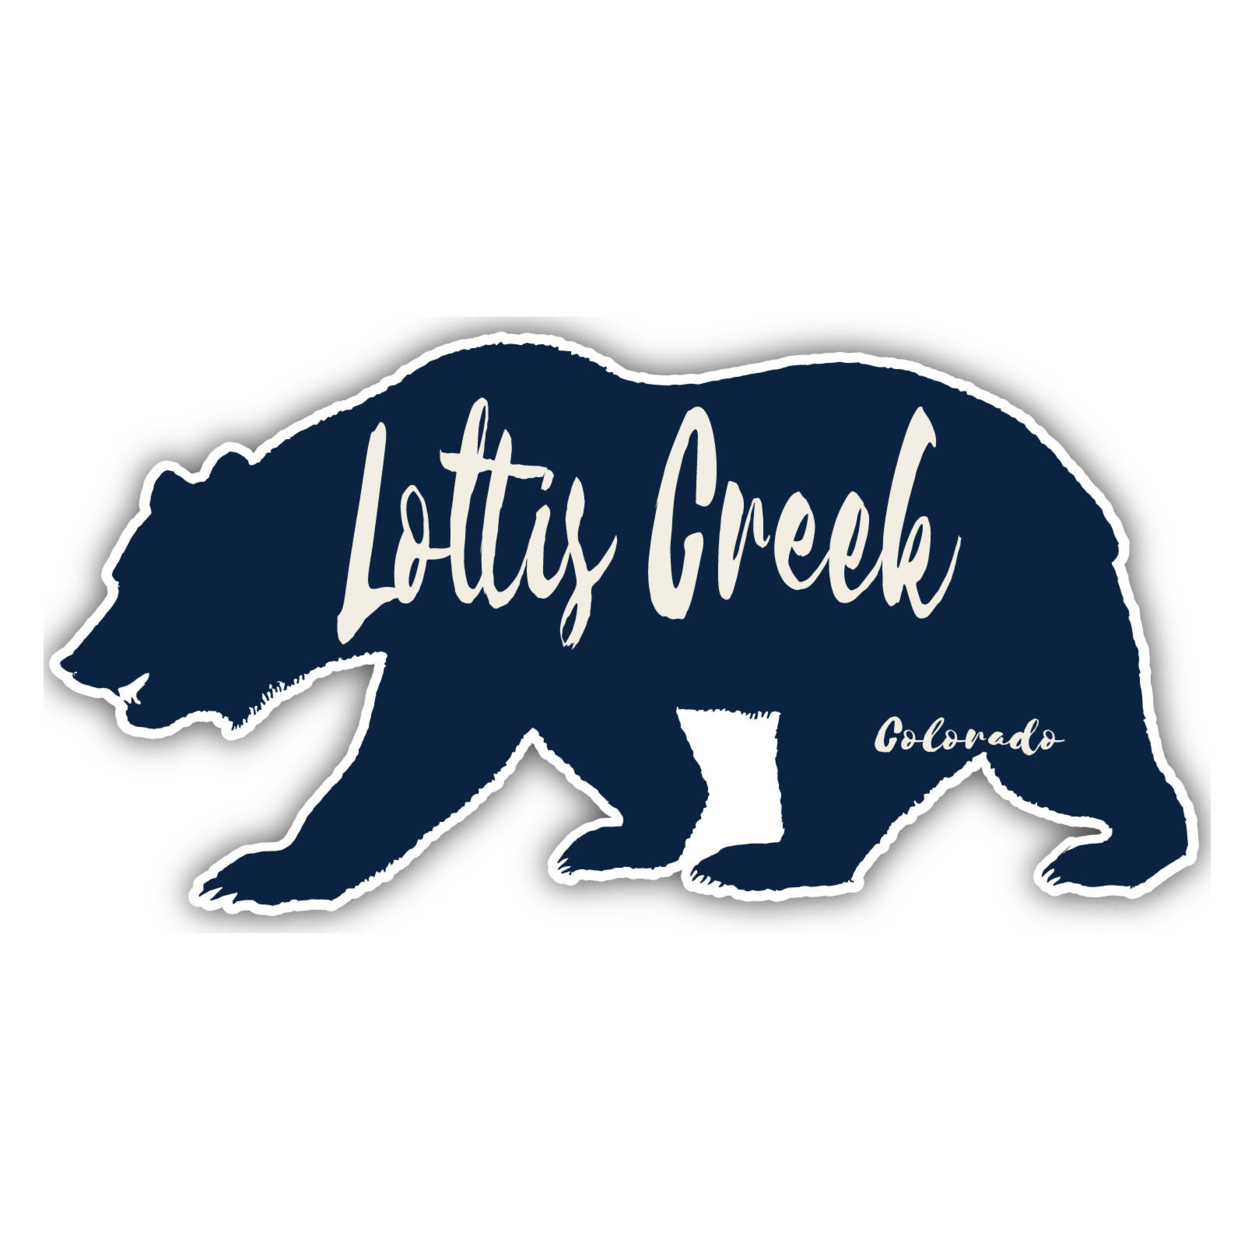 Lottis Creek Colorado Souvenir Decorative Stickers (Choose Theme And Size) - 2-Inch, Bear